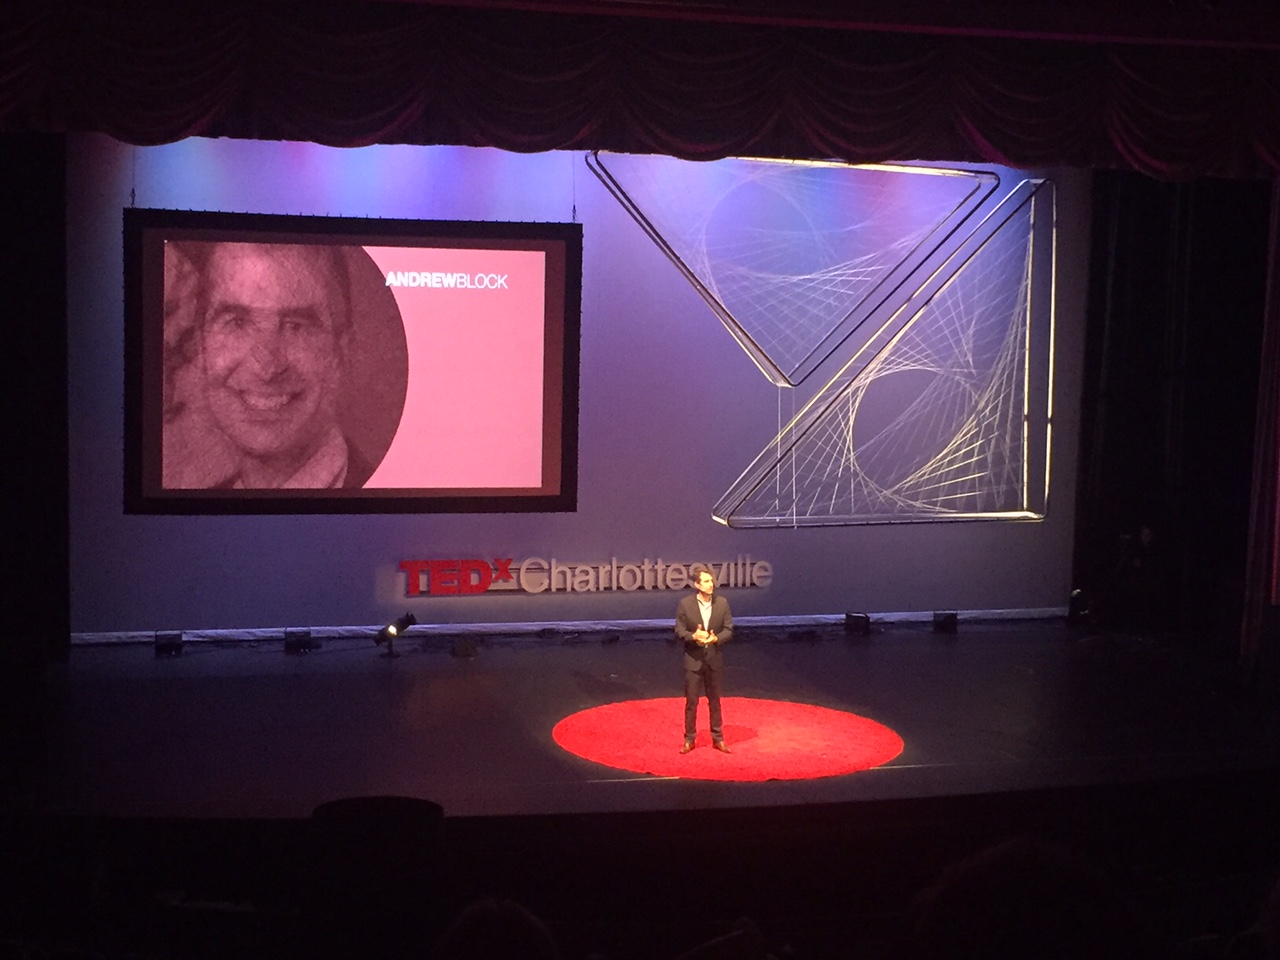 Director Blck Delivers TED Talk On Transition